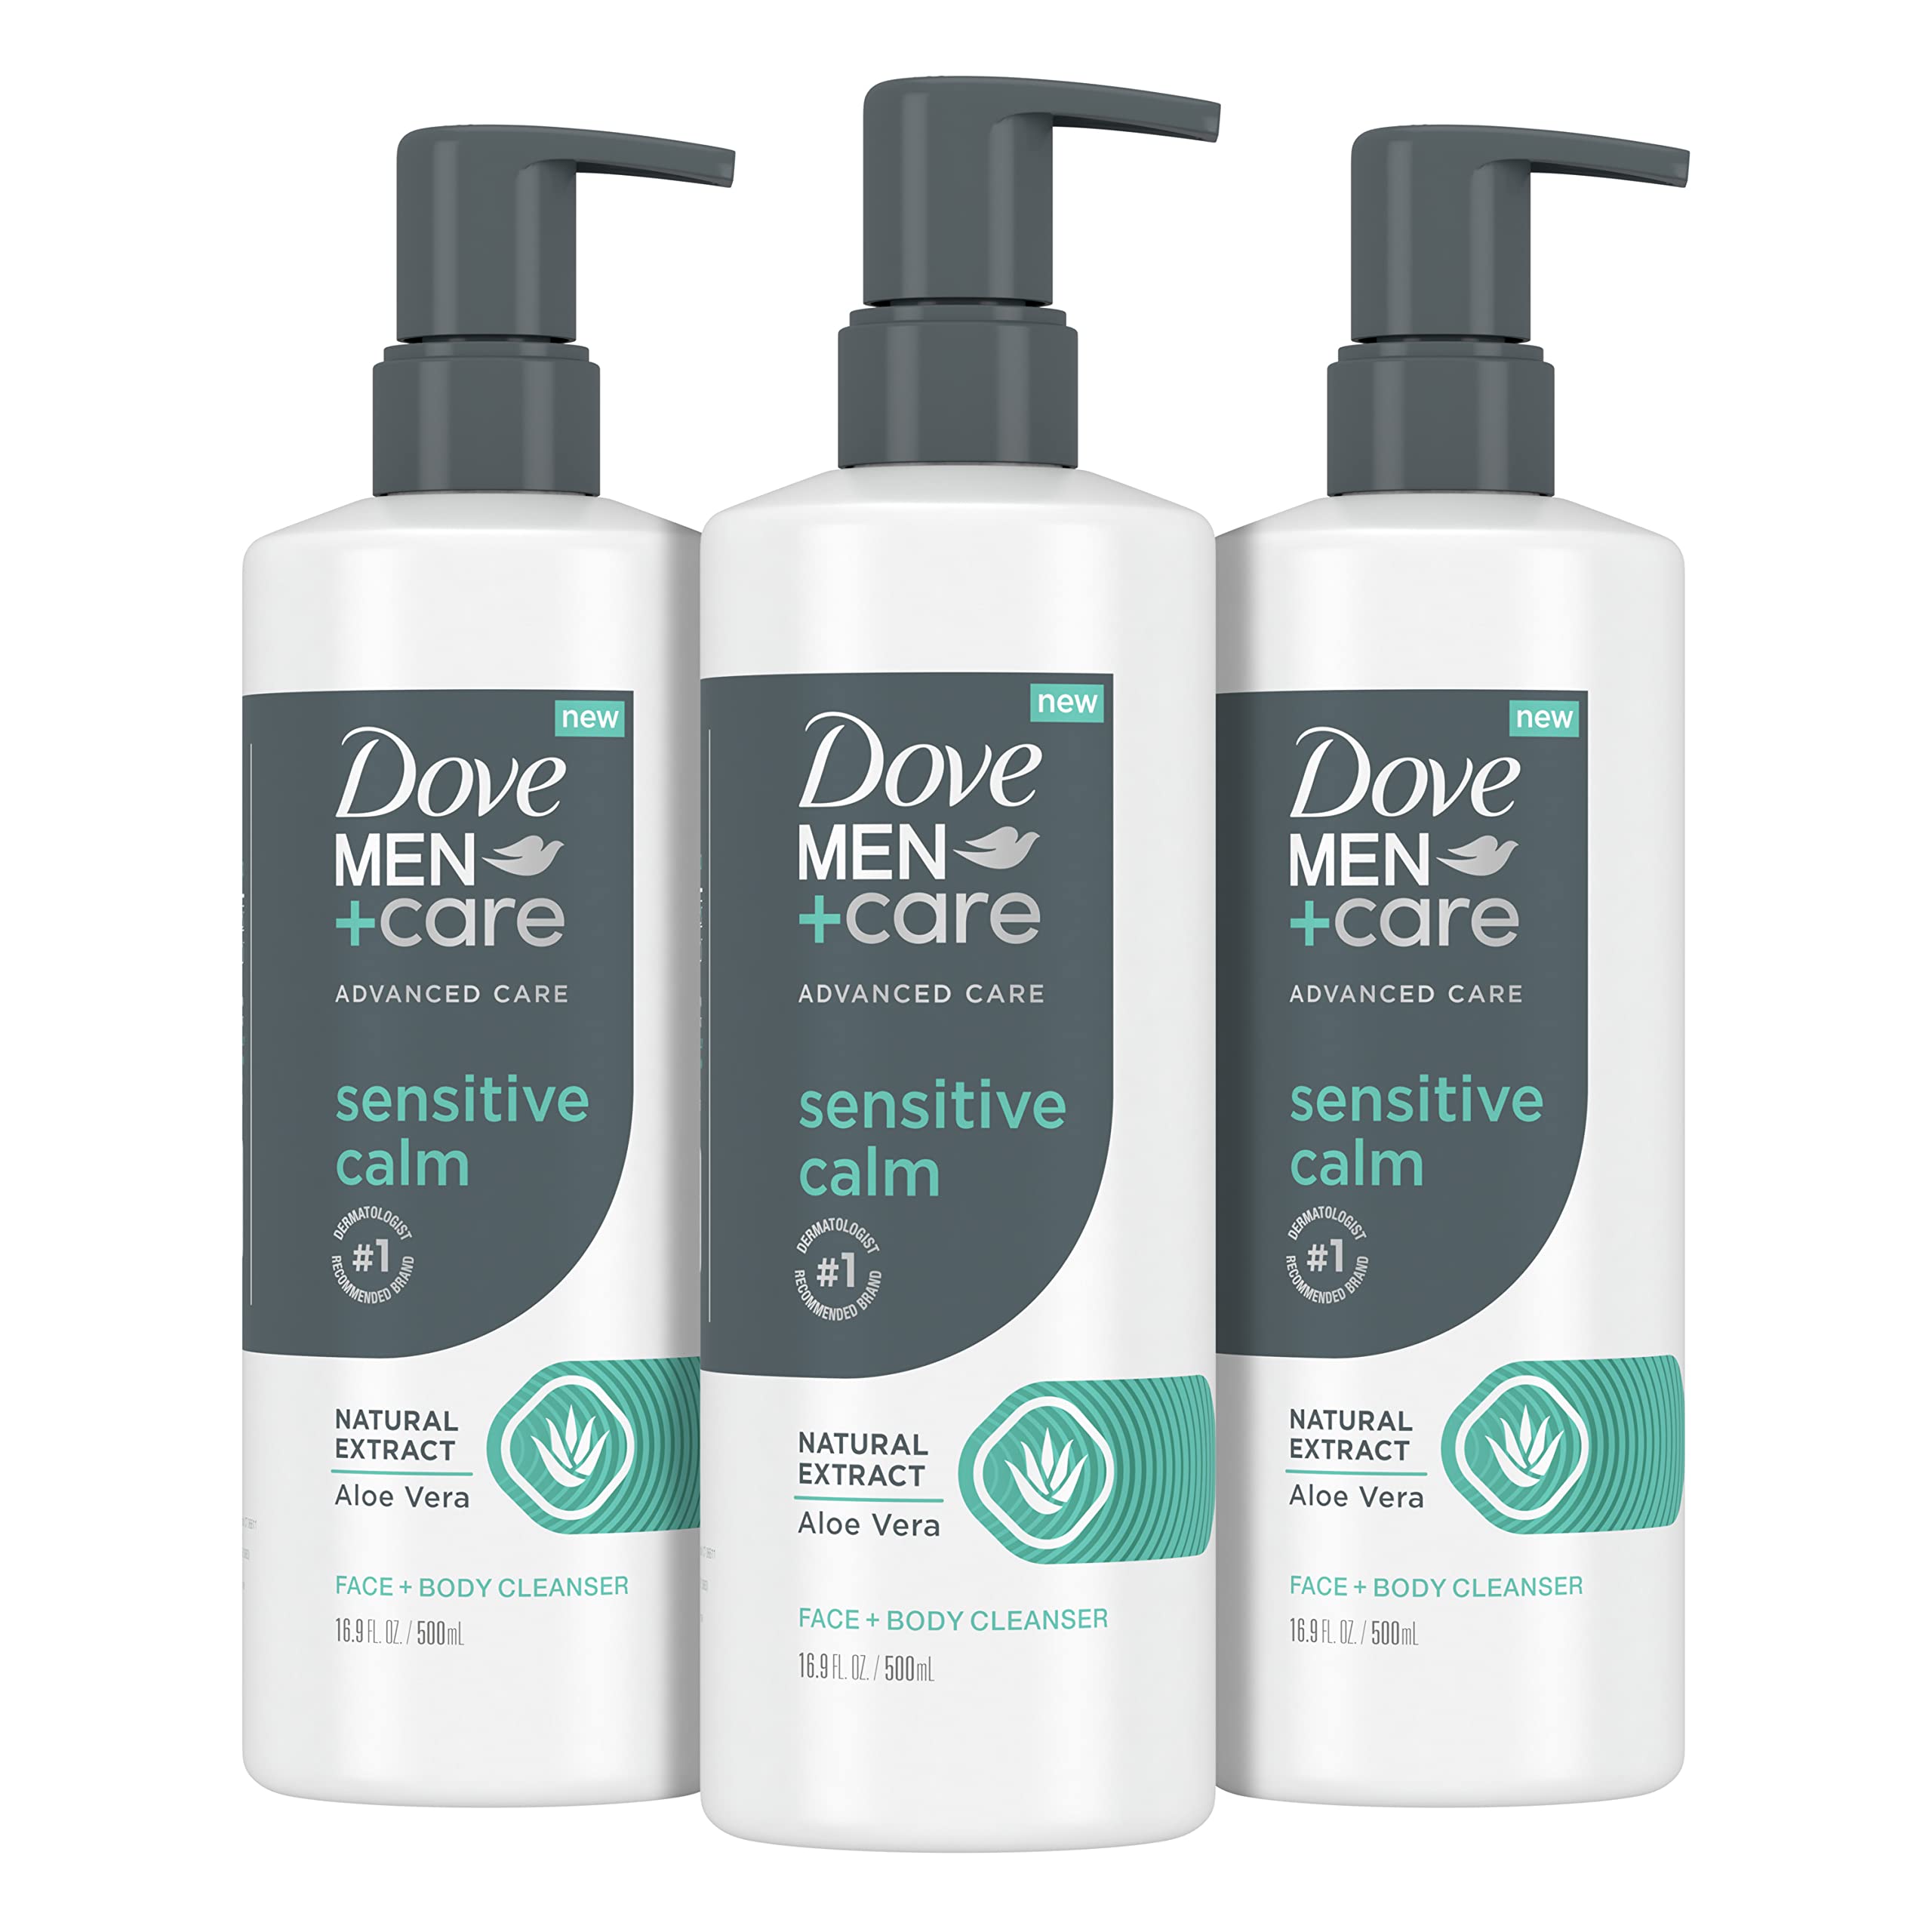 3-Count 16.9-Oz Dove MEN + CARE Advanced Care Face + Body Cleanser Wash (Sensitive Calm) $13.50 ($4.50 Ea) w/ S&S + Free Shipping w/ Prime or on $35+